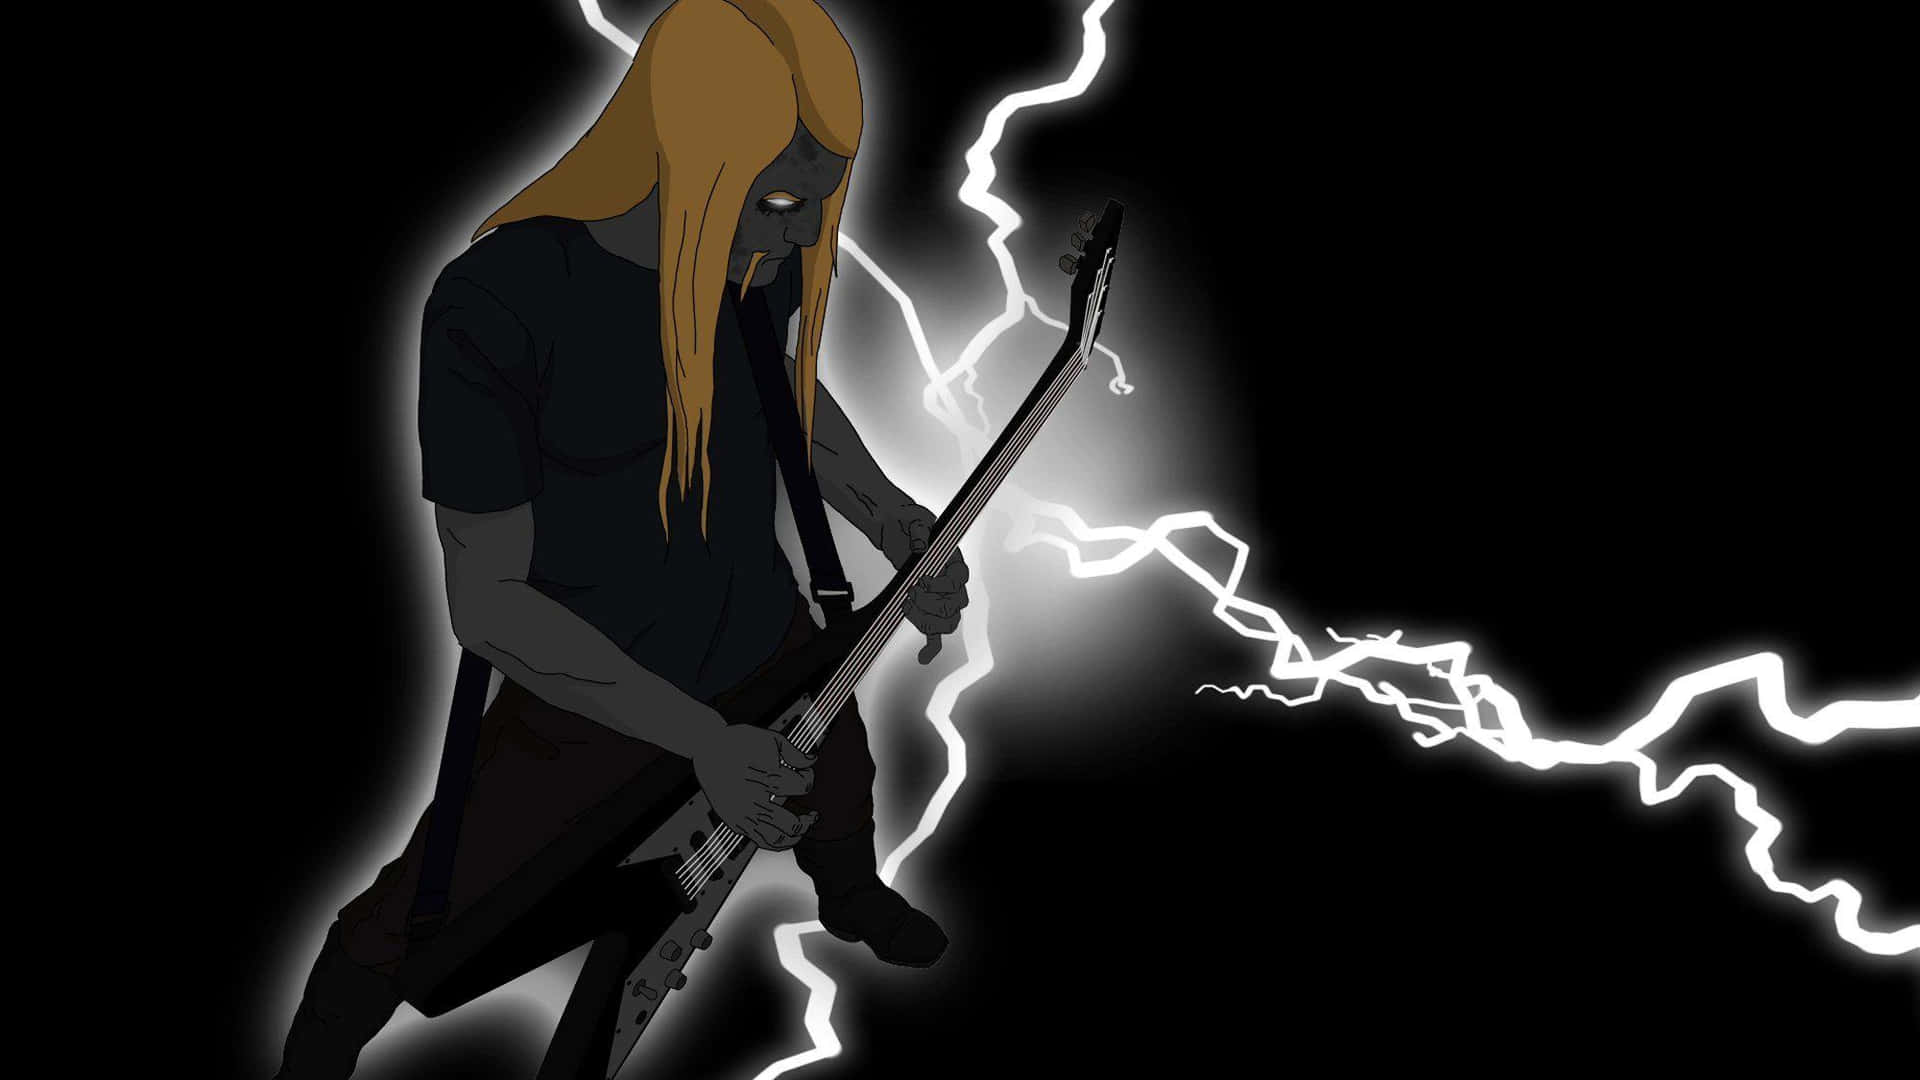 Electric Guitarist Lightning Strike Wallpaper